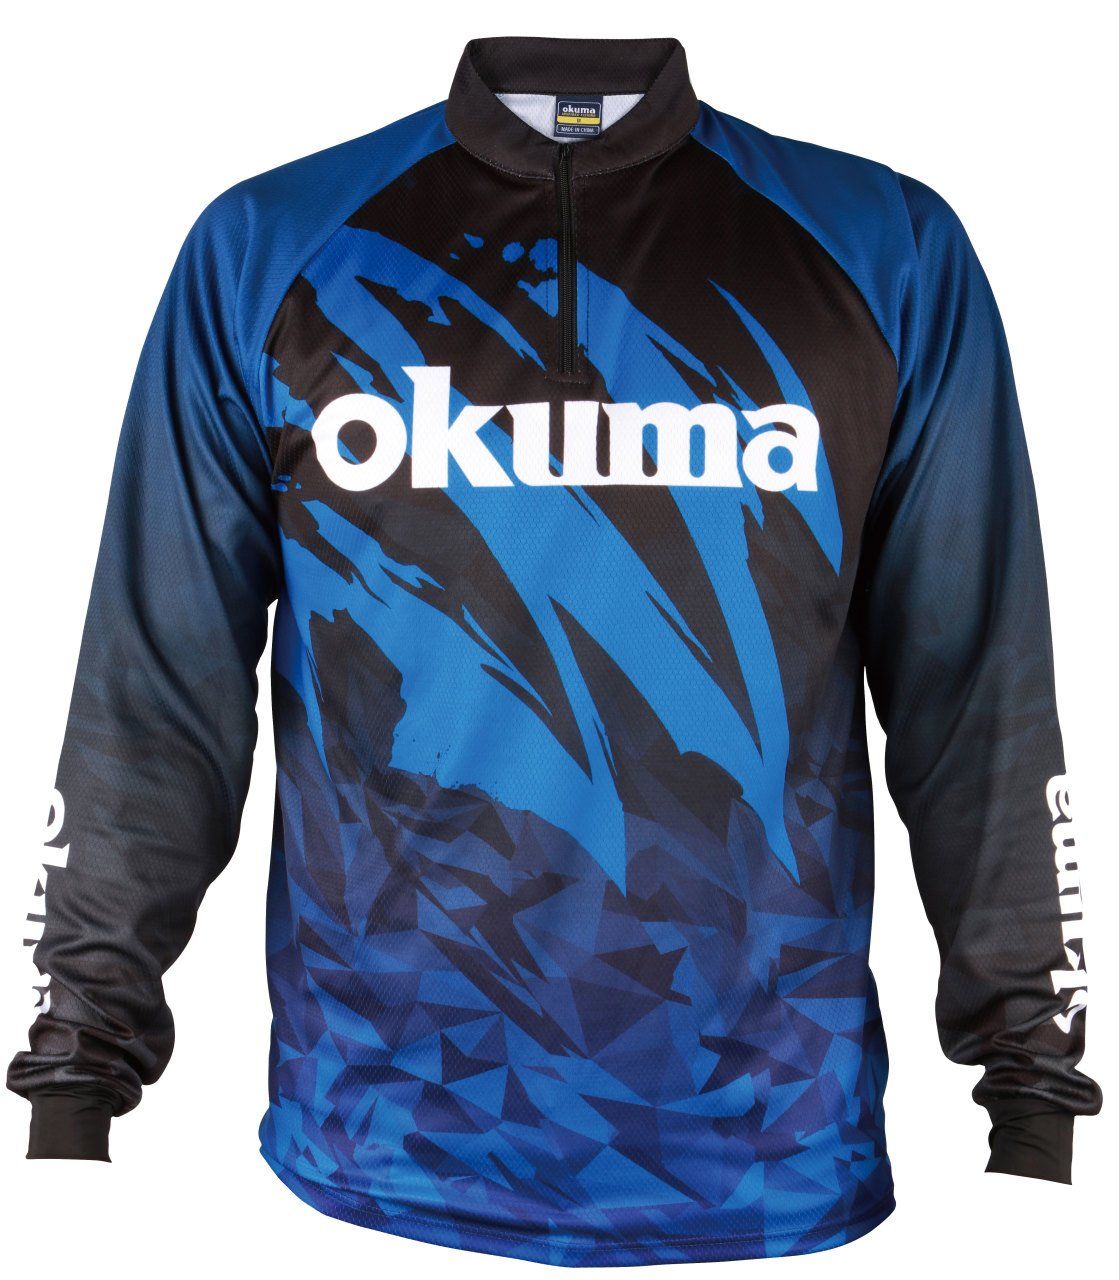 Okuma Motif Tournament jersey L